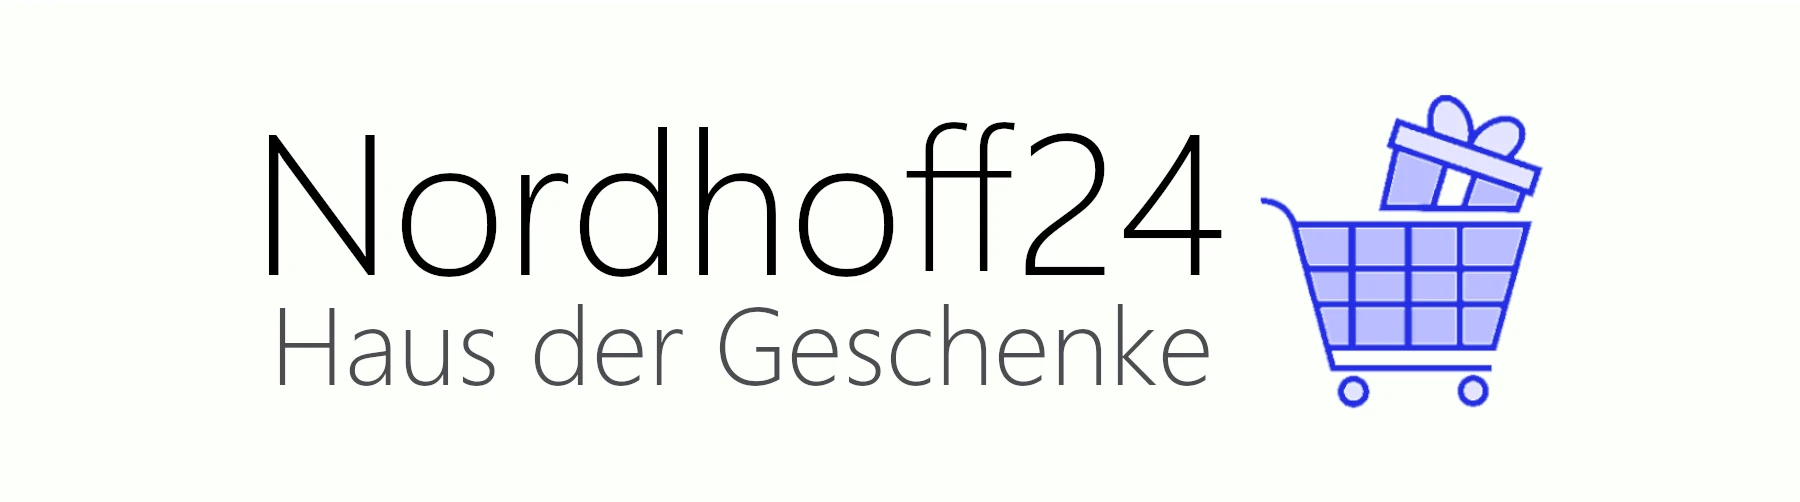 nordhoff24.de